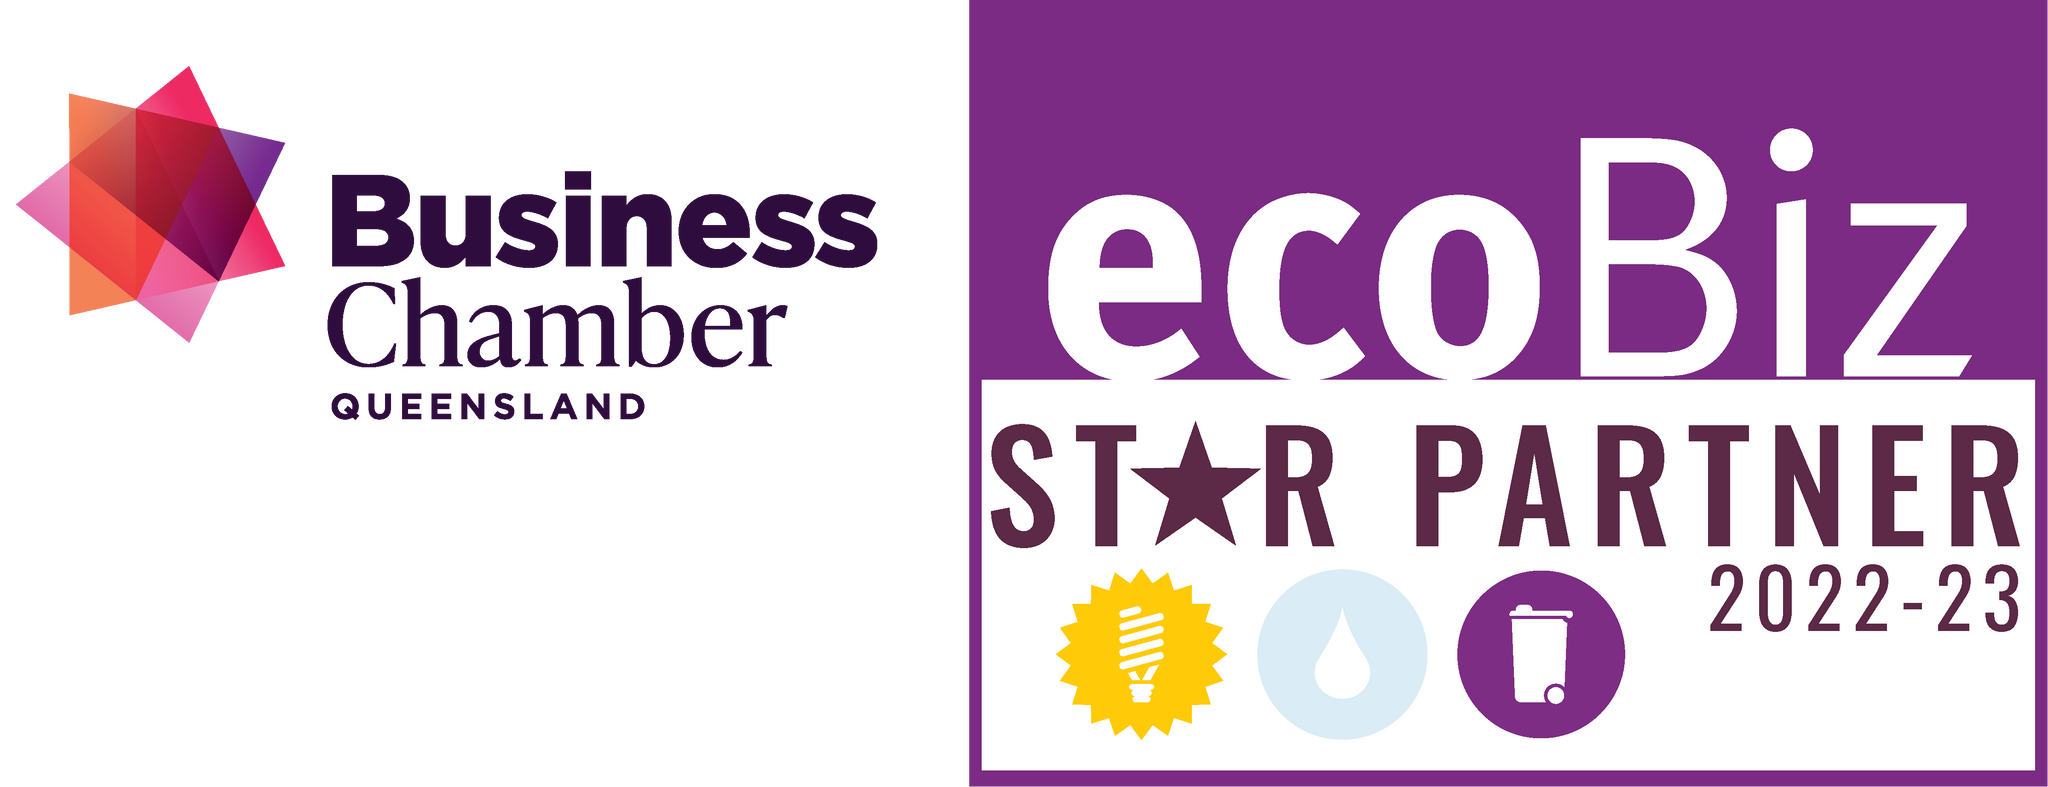 Business Chamber Queensland eco biz star partner